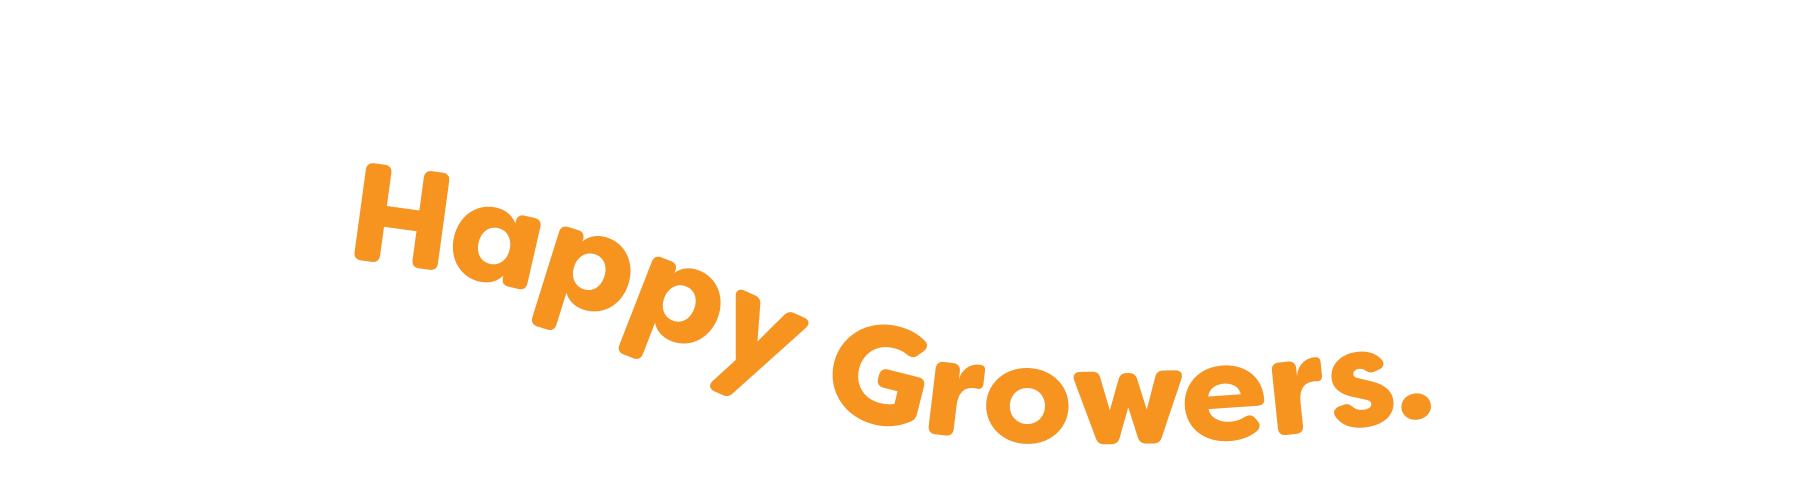 Grower Happy Text